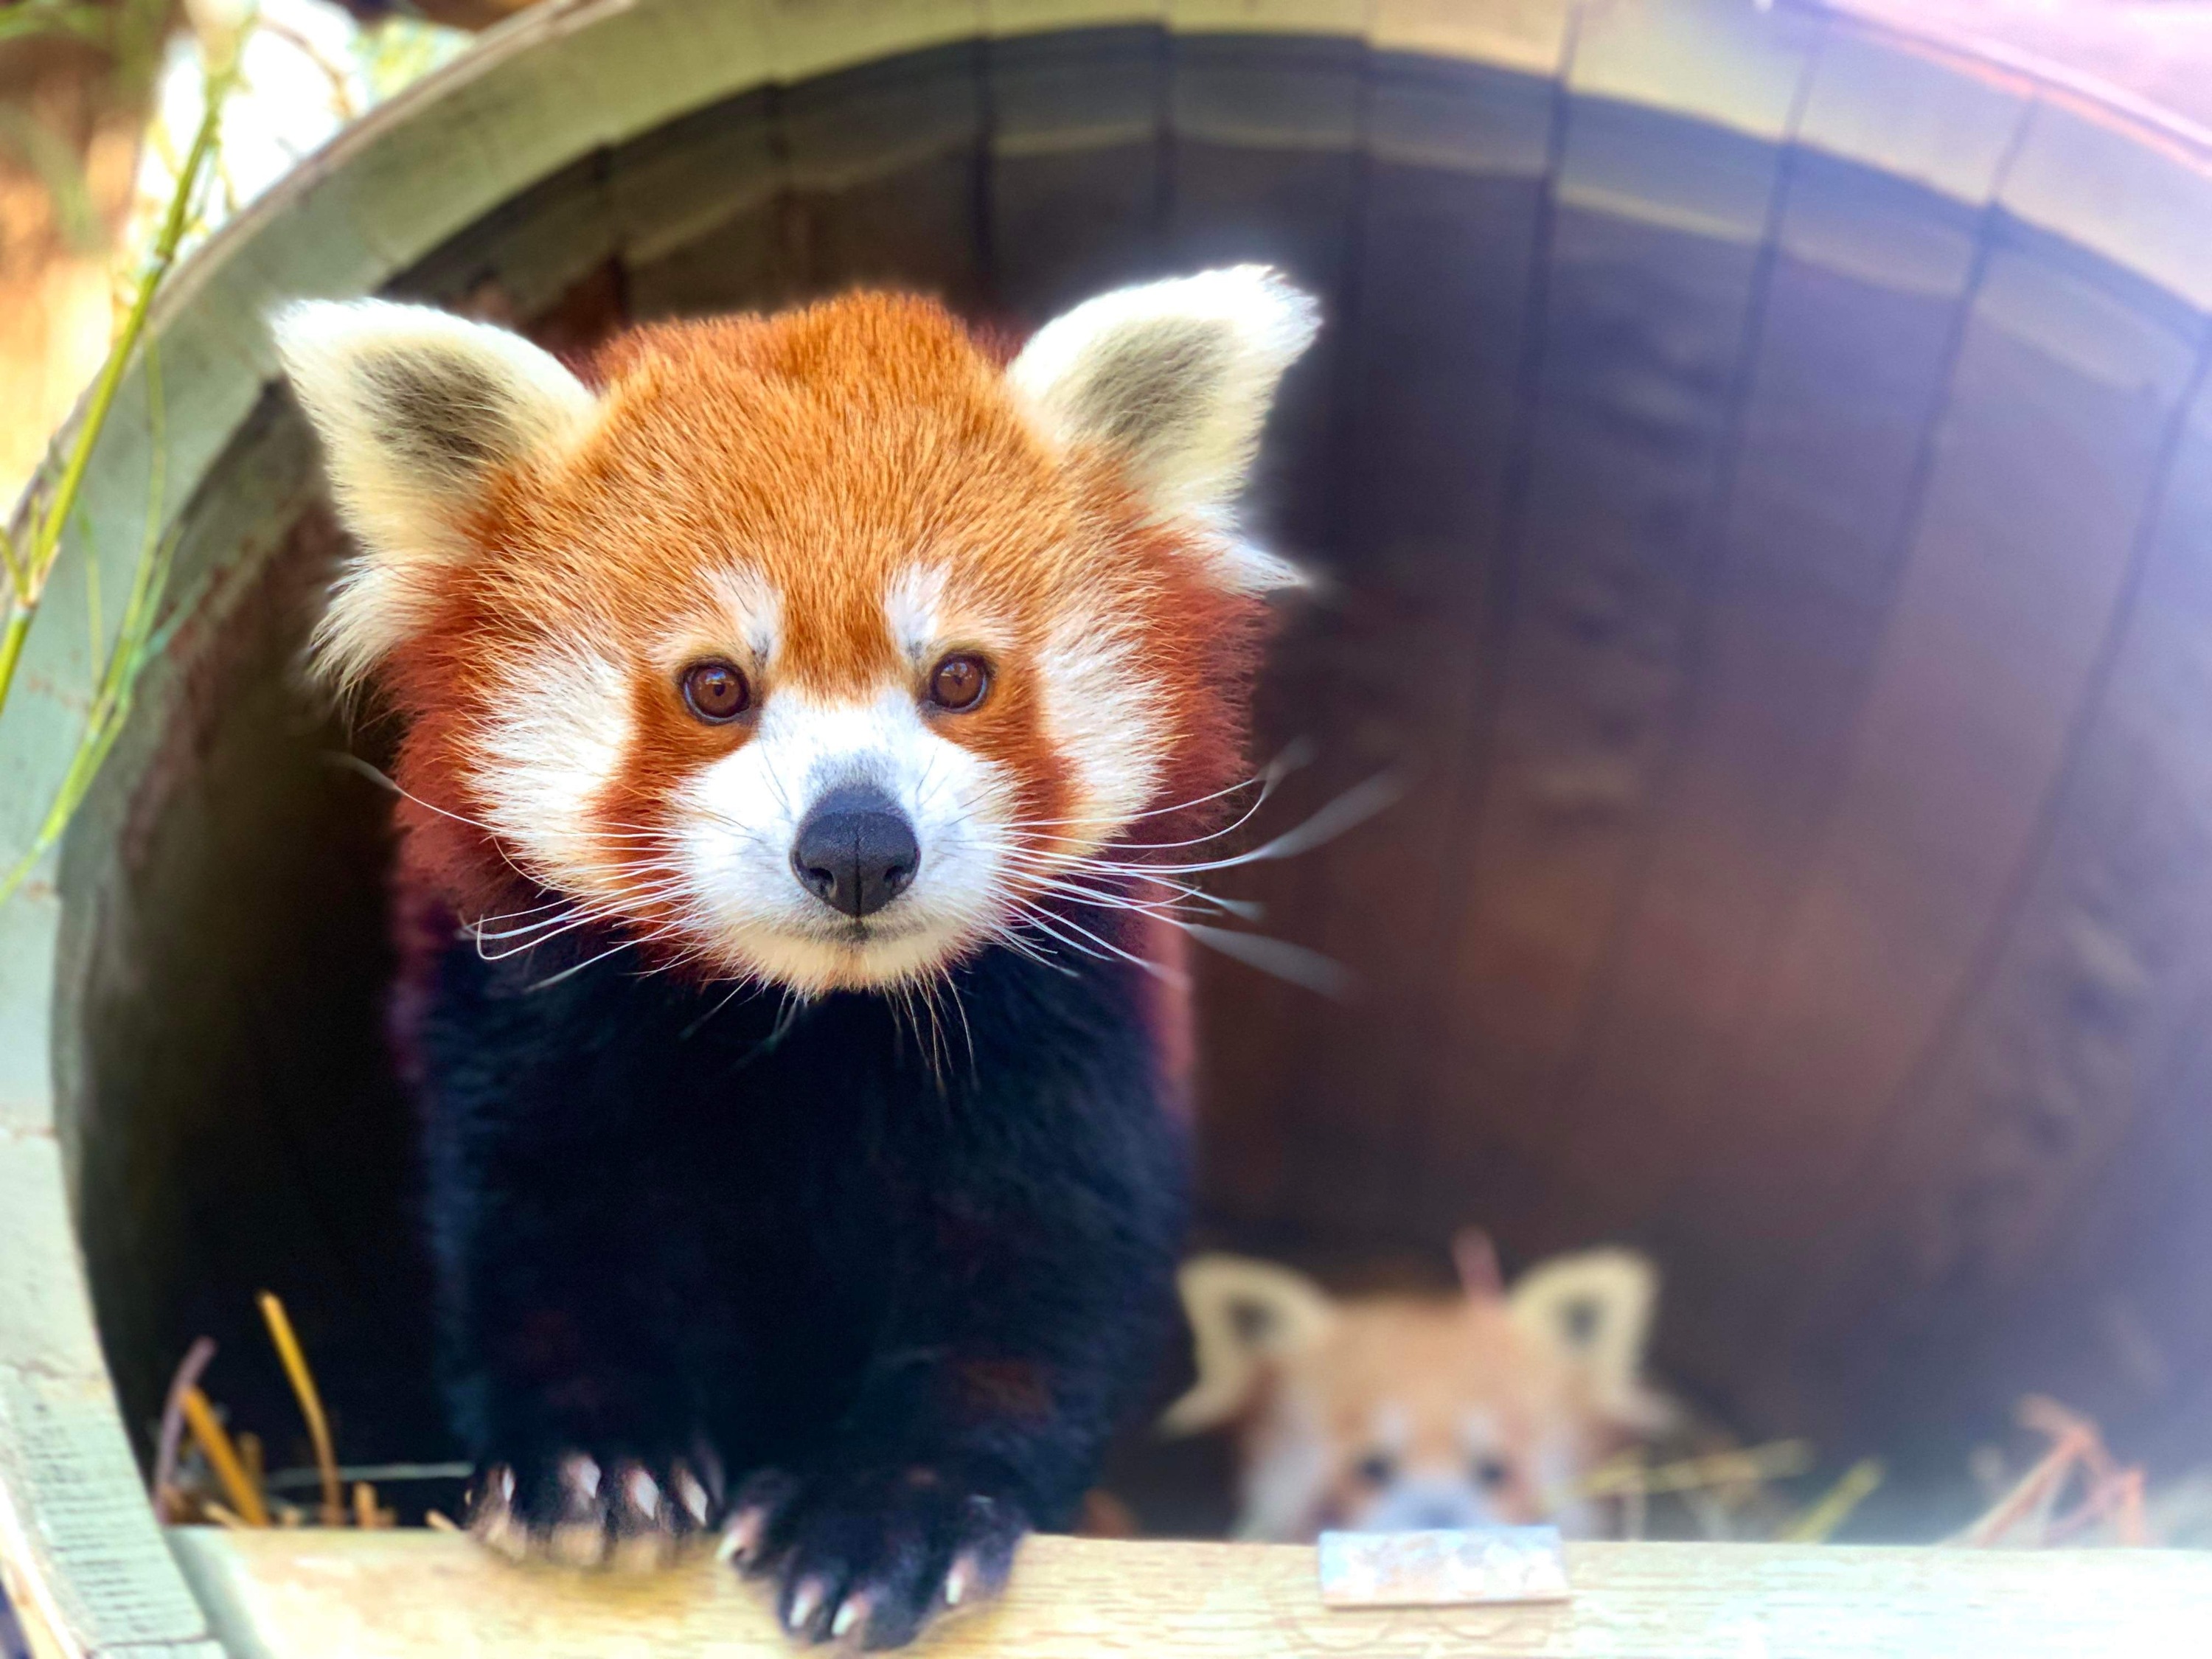 A super rare red panda has been born in an Australian wildlife park